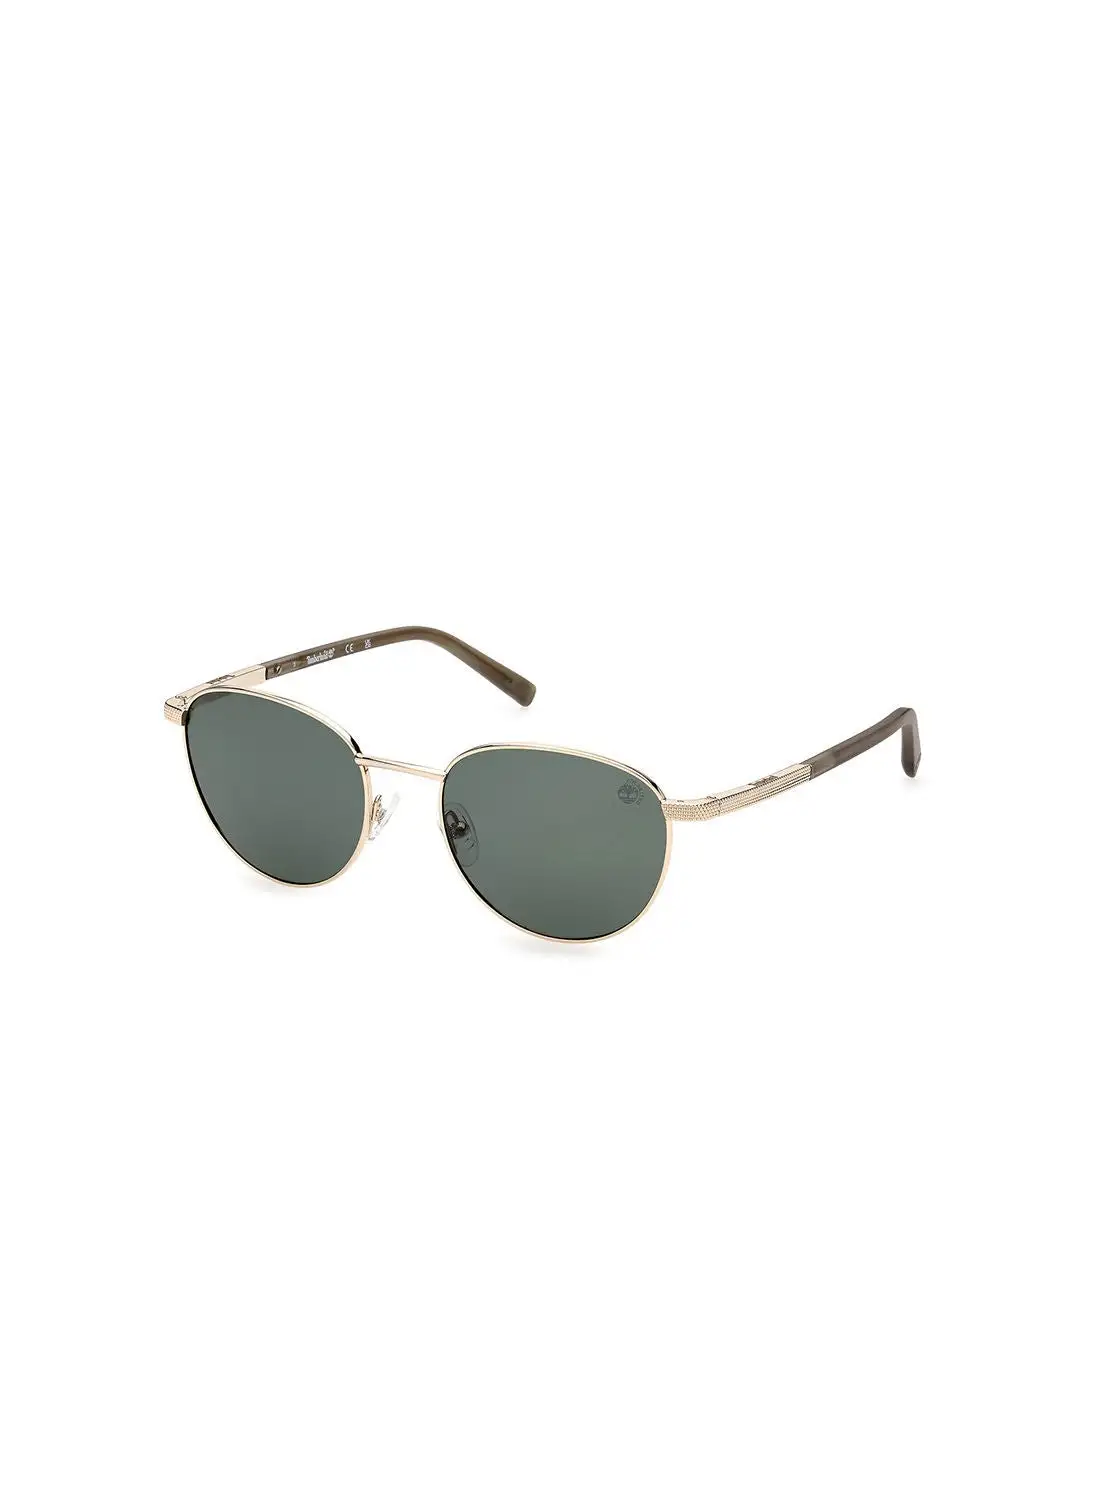 Timberland Men's Polarized Round Sunglasses - TB928432R54 - Lens Size: 54 Mm